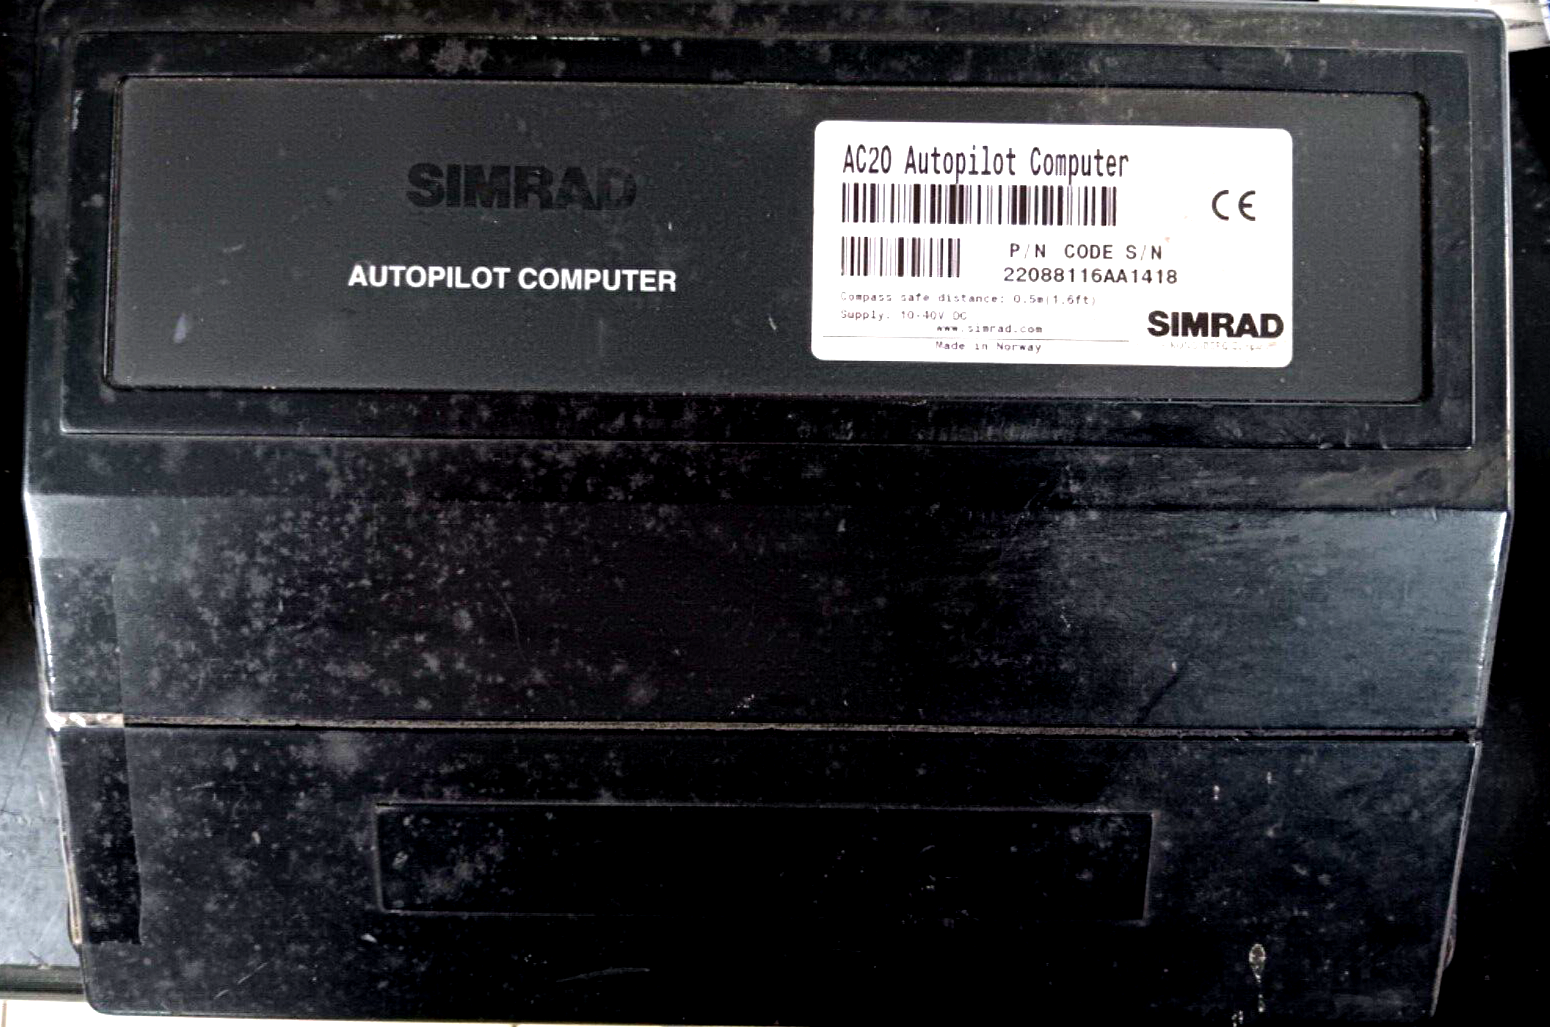 AC20 SIMRAD AUTOPILOT COMPUTER w/ FREE SHIPPING